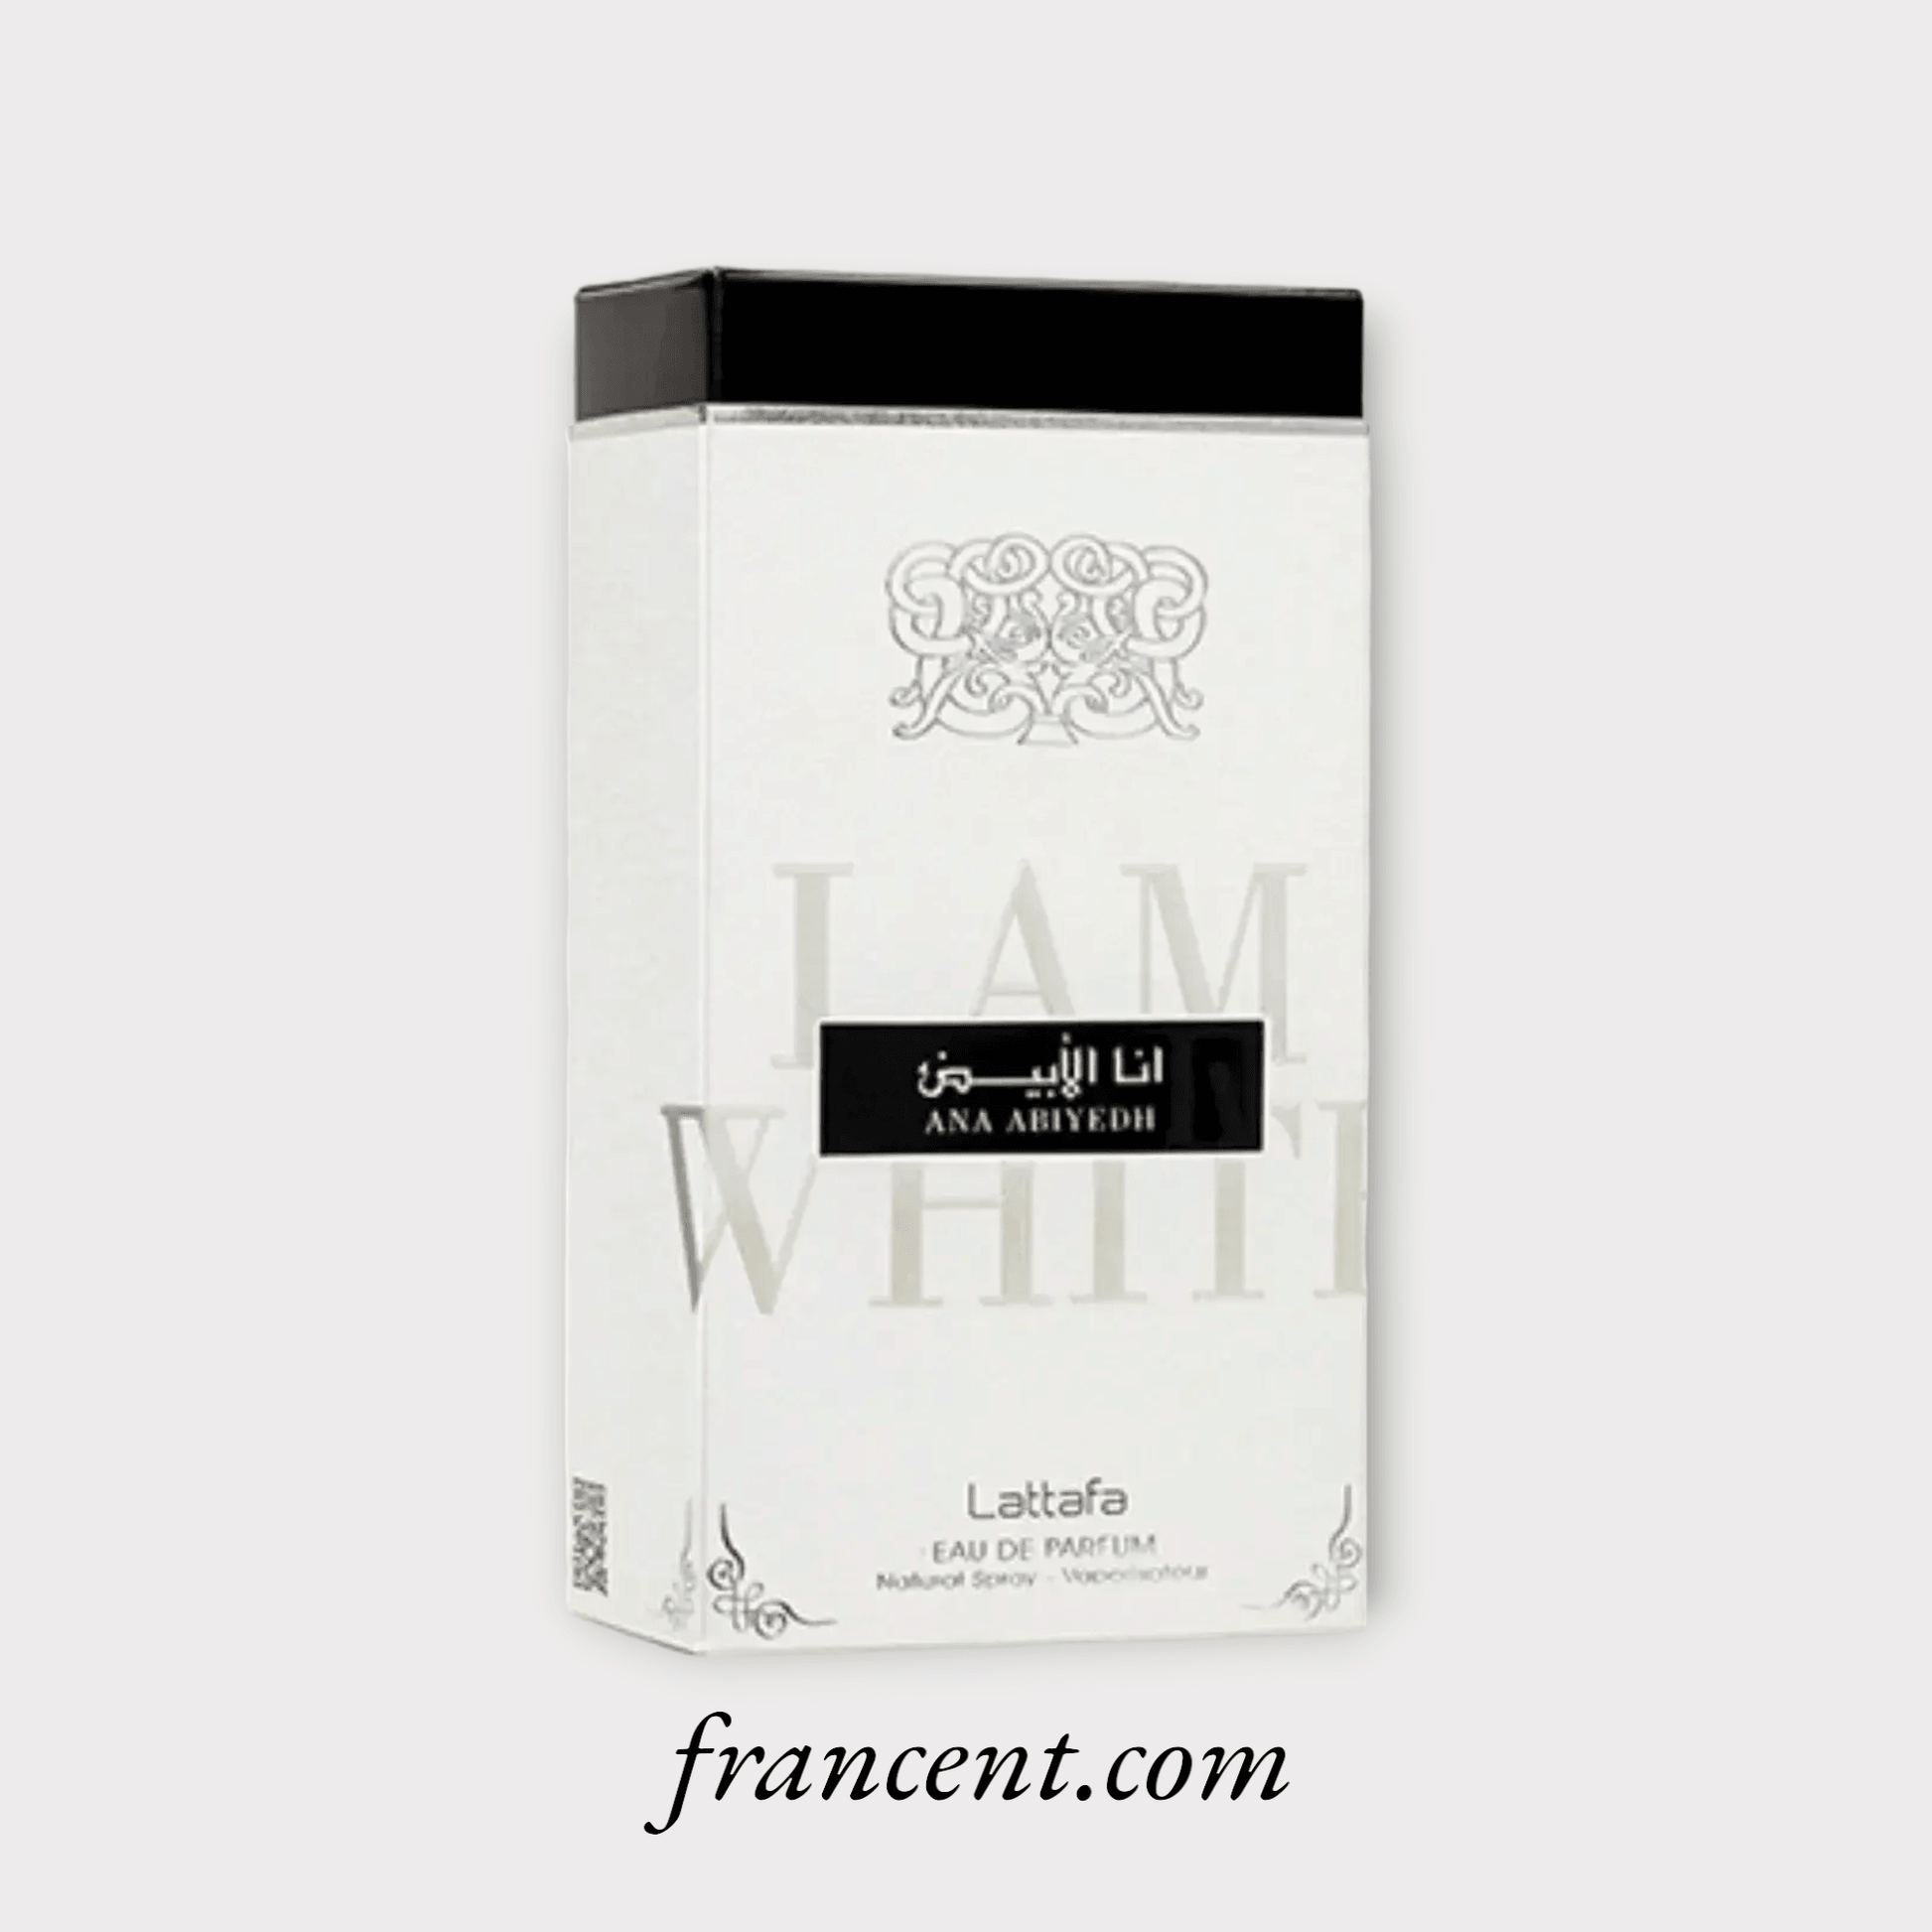 Lattafa | Ana Abiyedh - Francent Perfumes